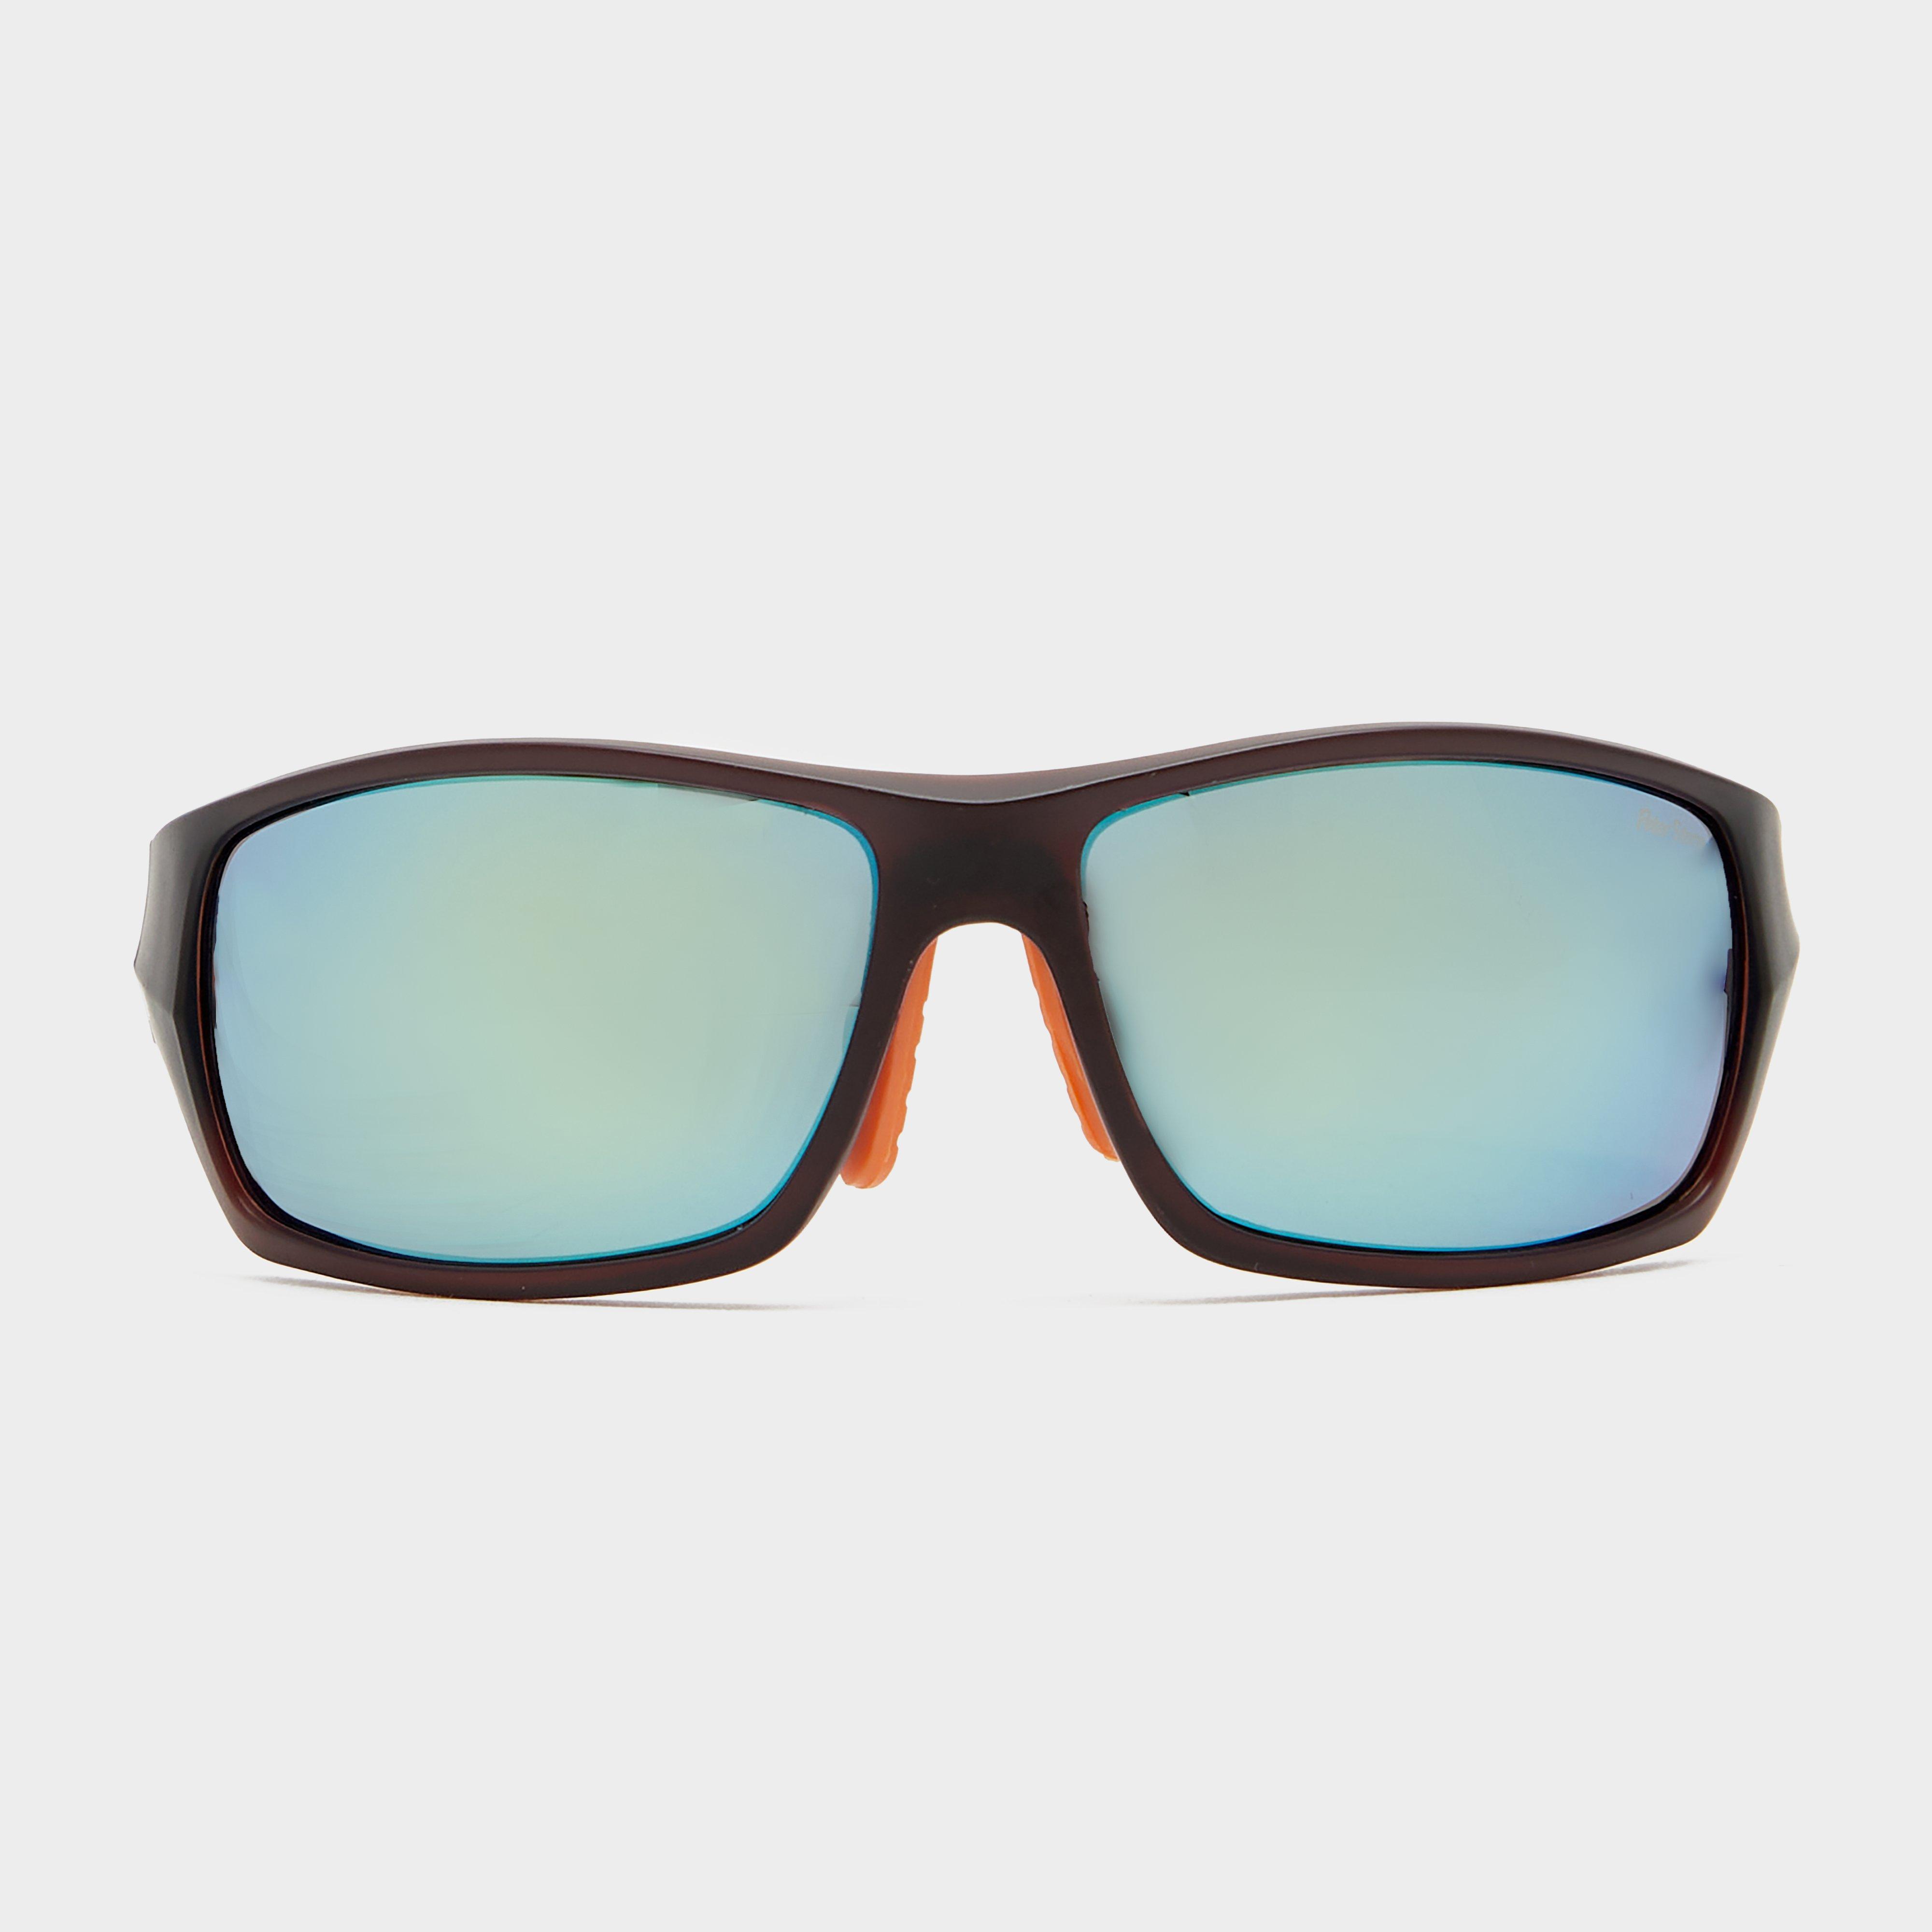 Image of Peter Storm Torquay Sunglasses - Brn/Gld, BRN/GLD